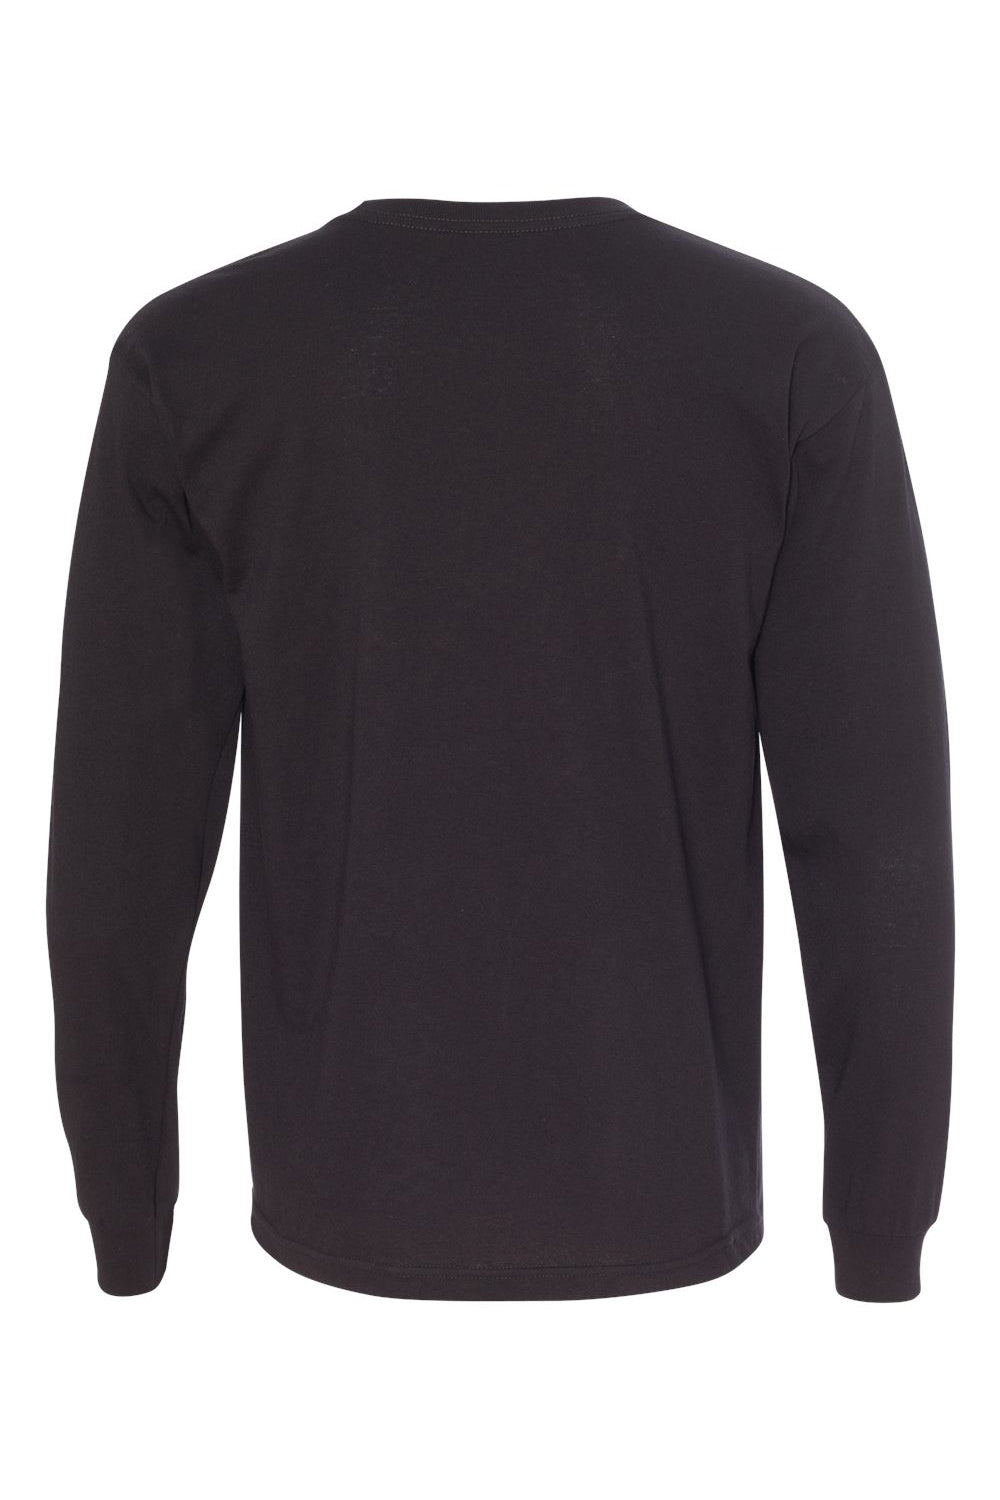 Bayside BA5060 Mens USA Made Long Sleeve Crewneck T-Shirt Black Flat Back